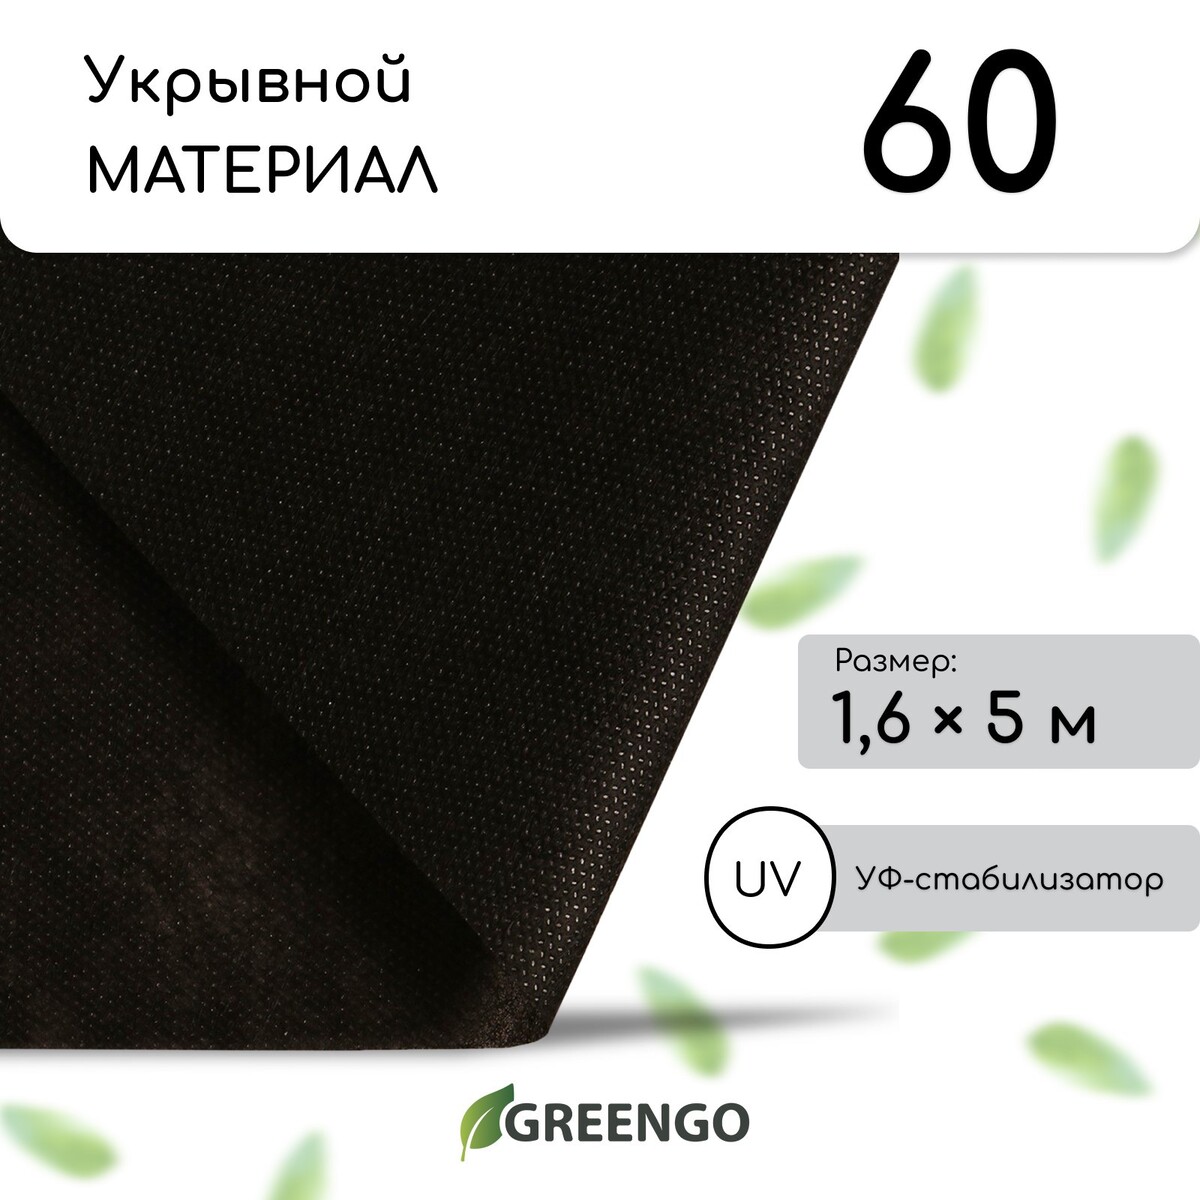  , 5   1.6 ,  60 / ,   -, , greengo,  20%